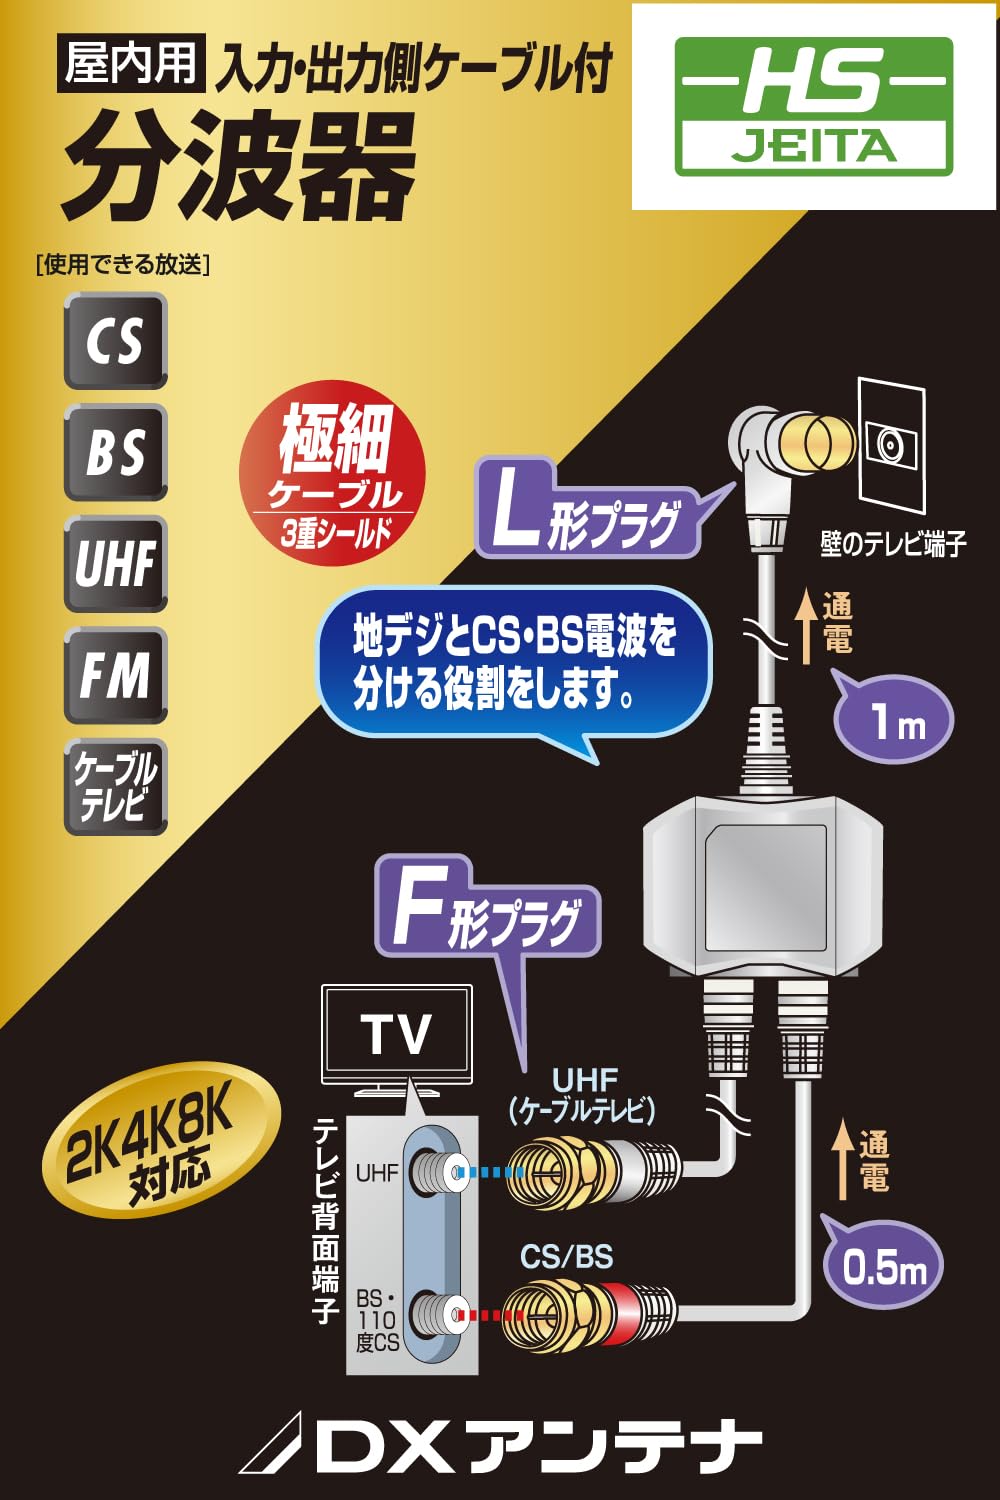 DX Antenna, Waveformer, Antenna Divider, 2K 4K, 8K (3224MHz) Compatible, Terrestrial Digital/BS/CS Broadcasting, Input Side Cable 3.3 ft (1 m), Output Side Cable, 0.5 m (0.5 m), Integrated Cable,